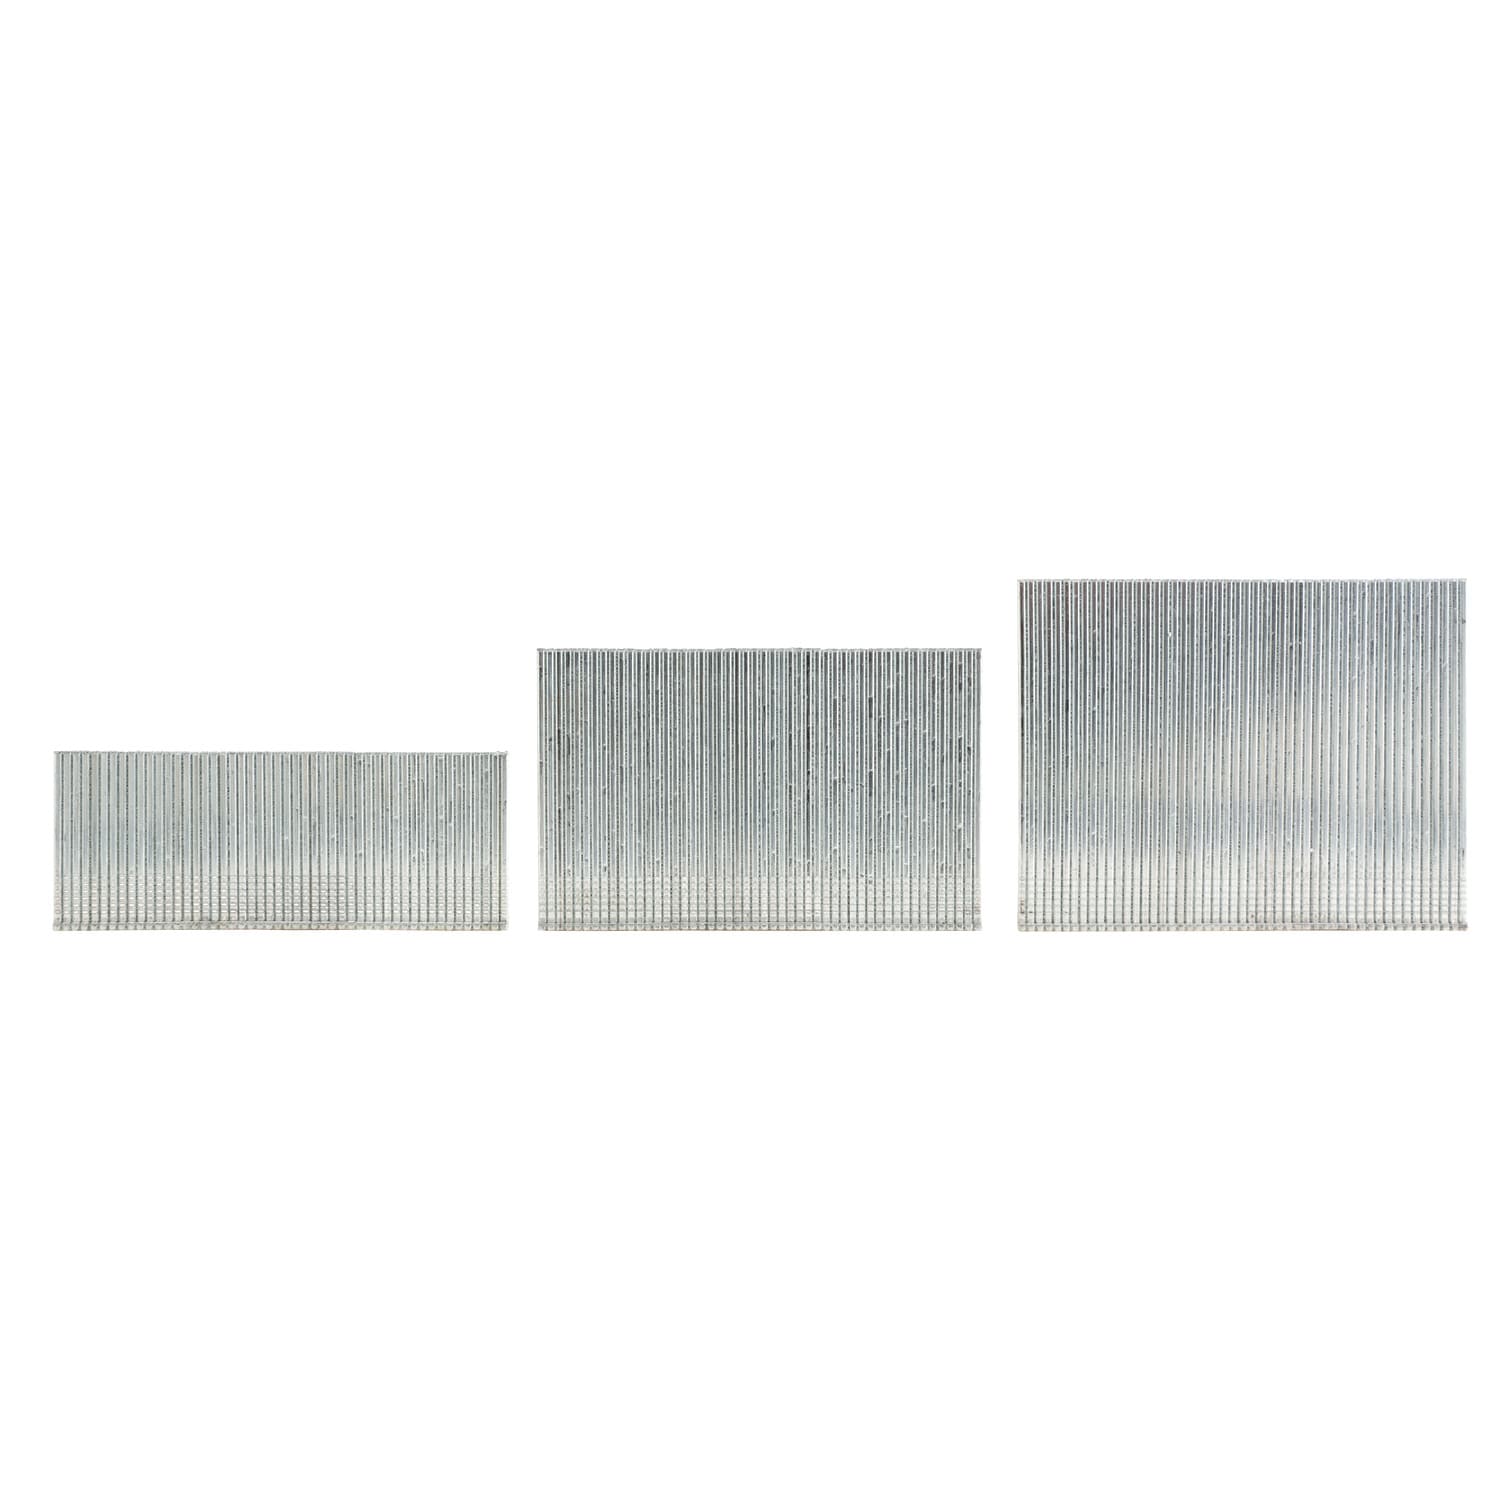 PASLODE Finishing Nails - Strip - 16GA - 1 3/4-in - 2500/Box 095435 | RONA